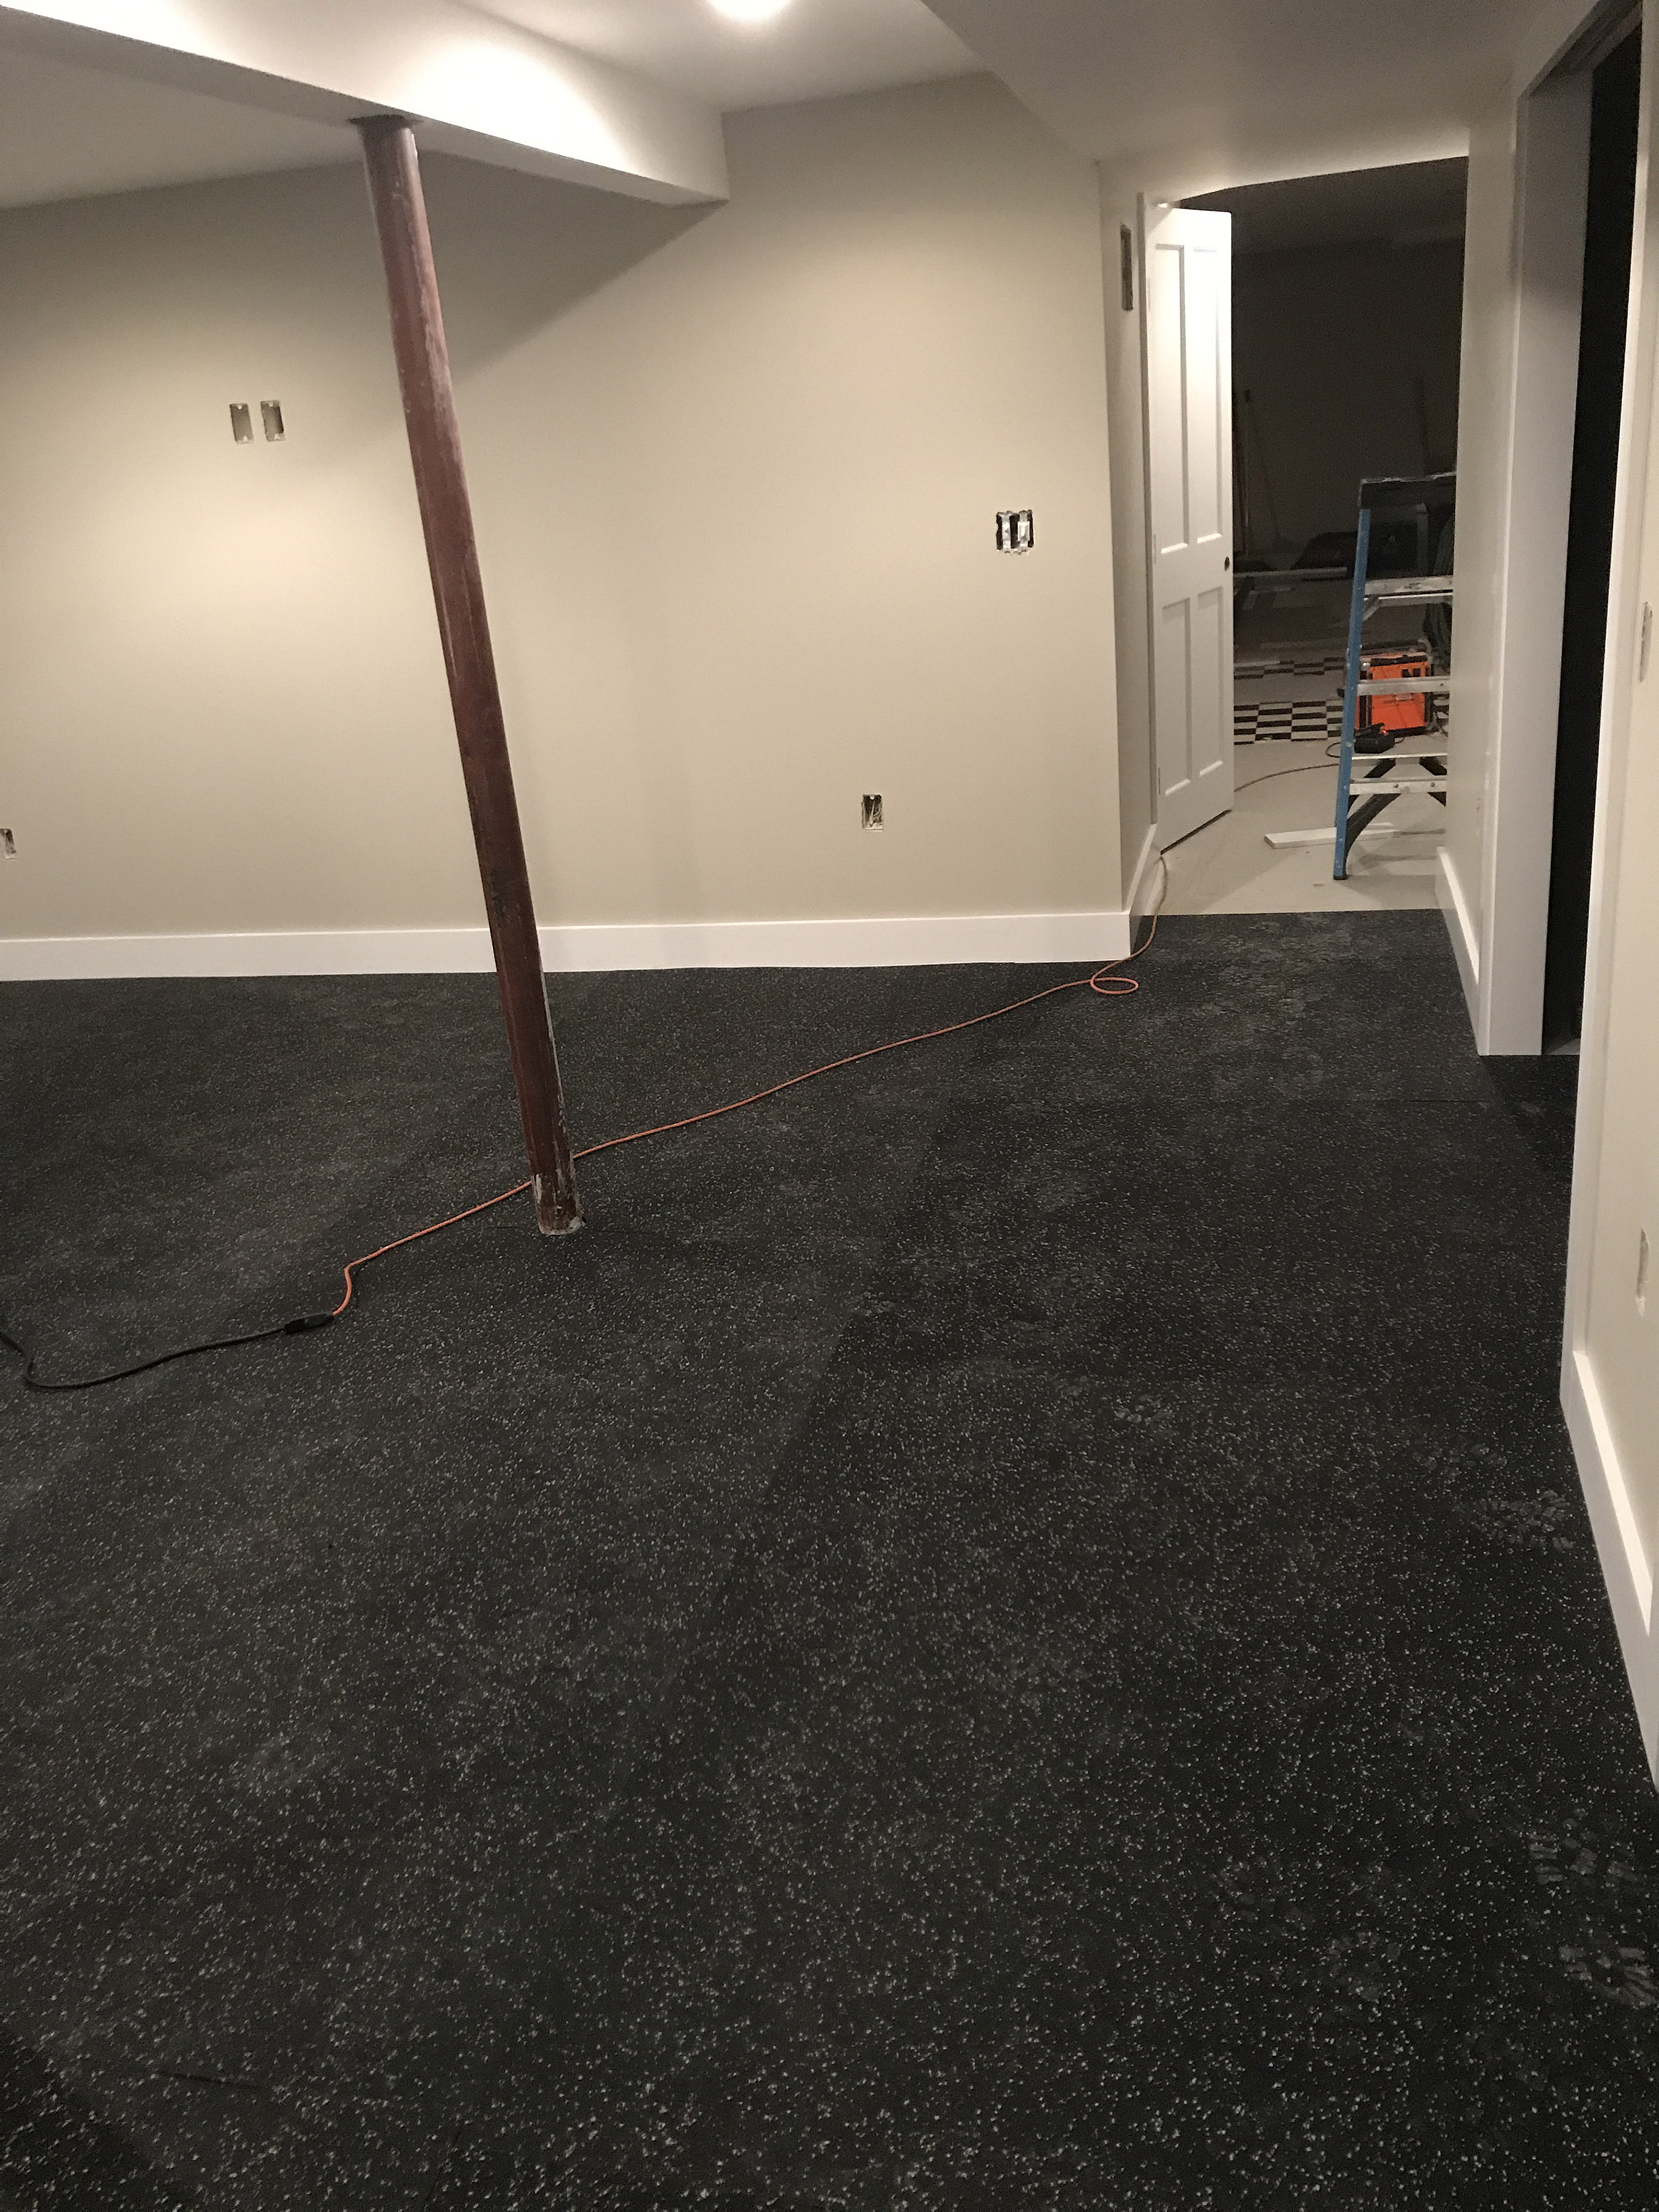 Rubber Flooring Rolls Geneva 1/2 Inch 10% Color Per SF customer review photo 2